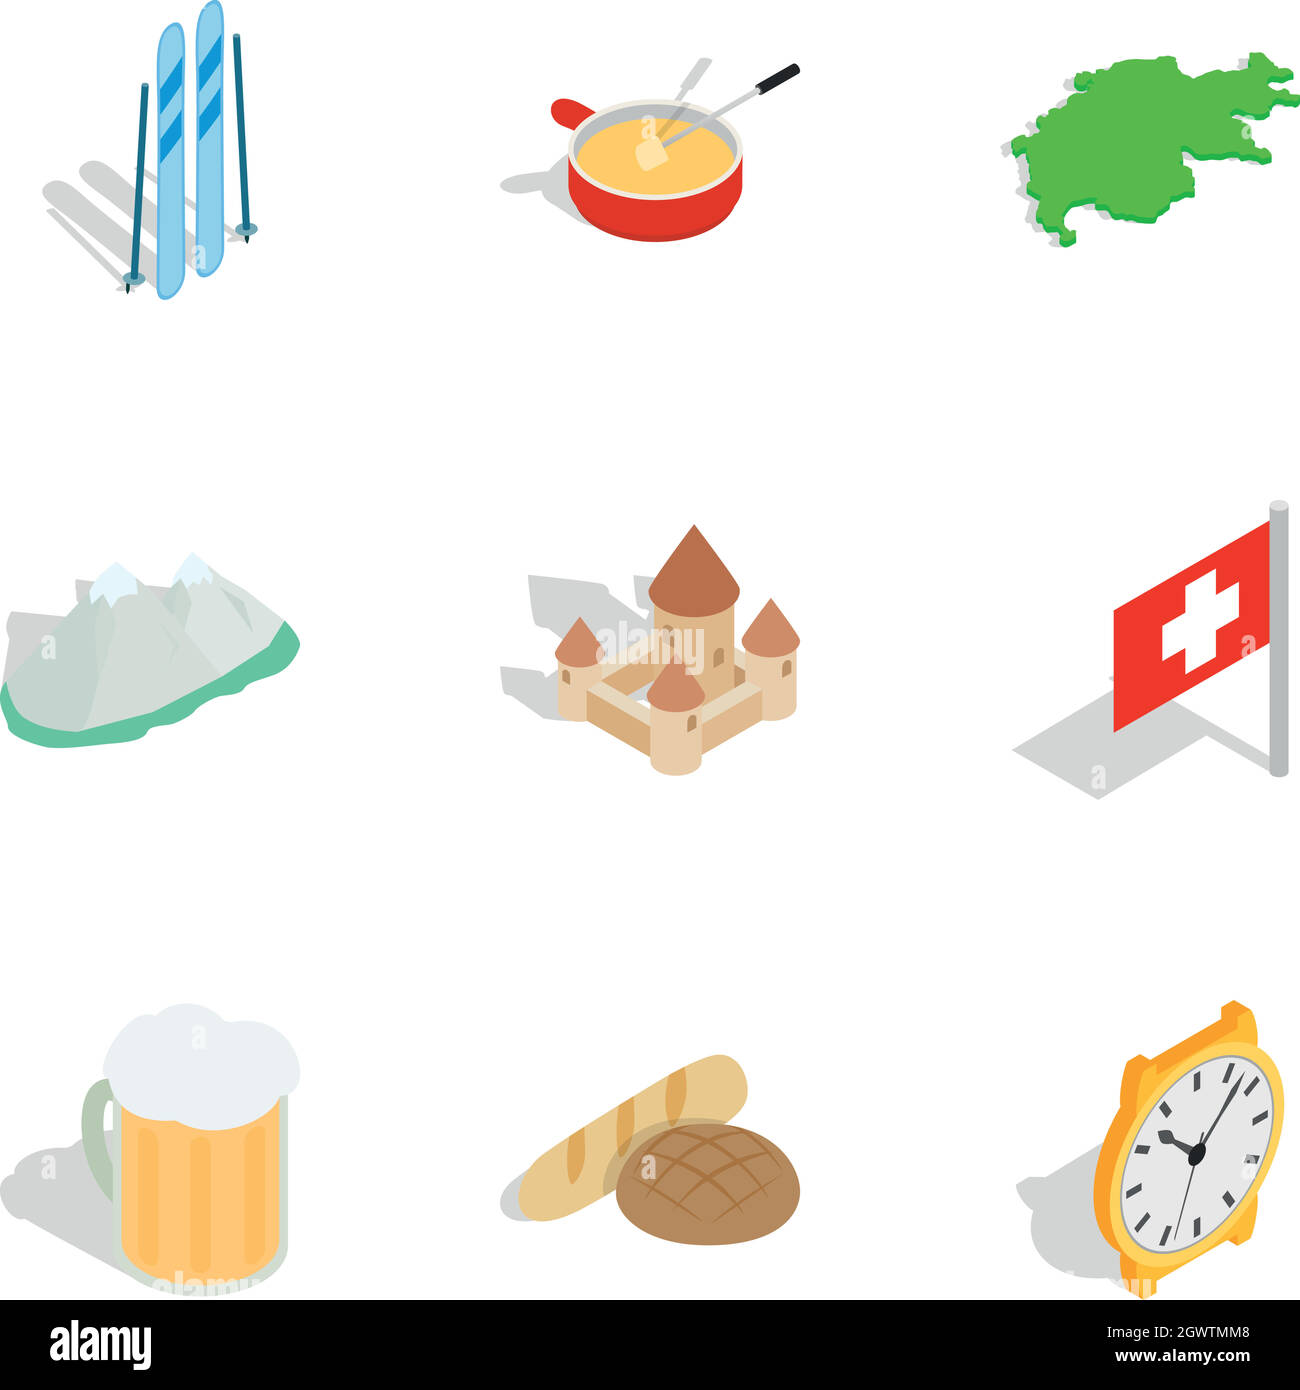 Switzerland cultural elements icons set Stock Vector